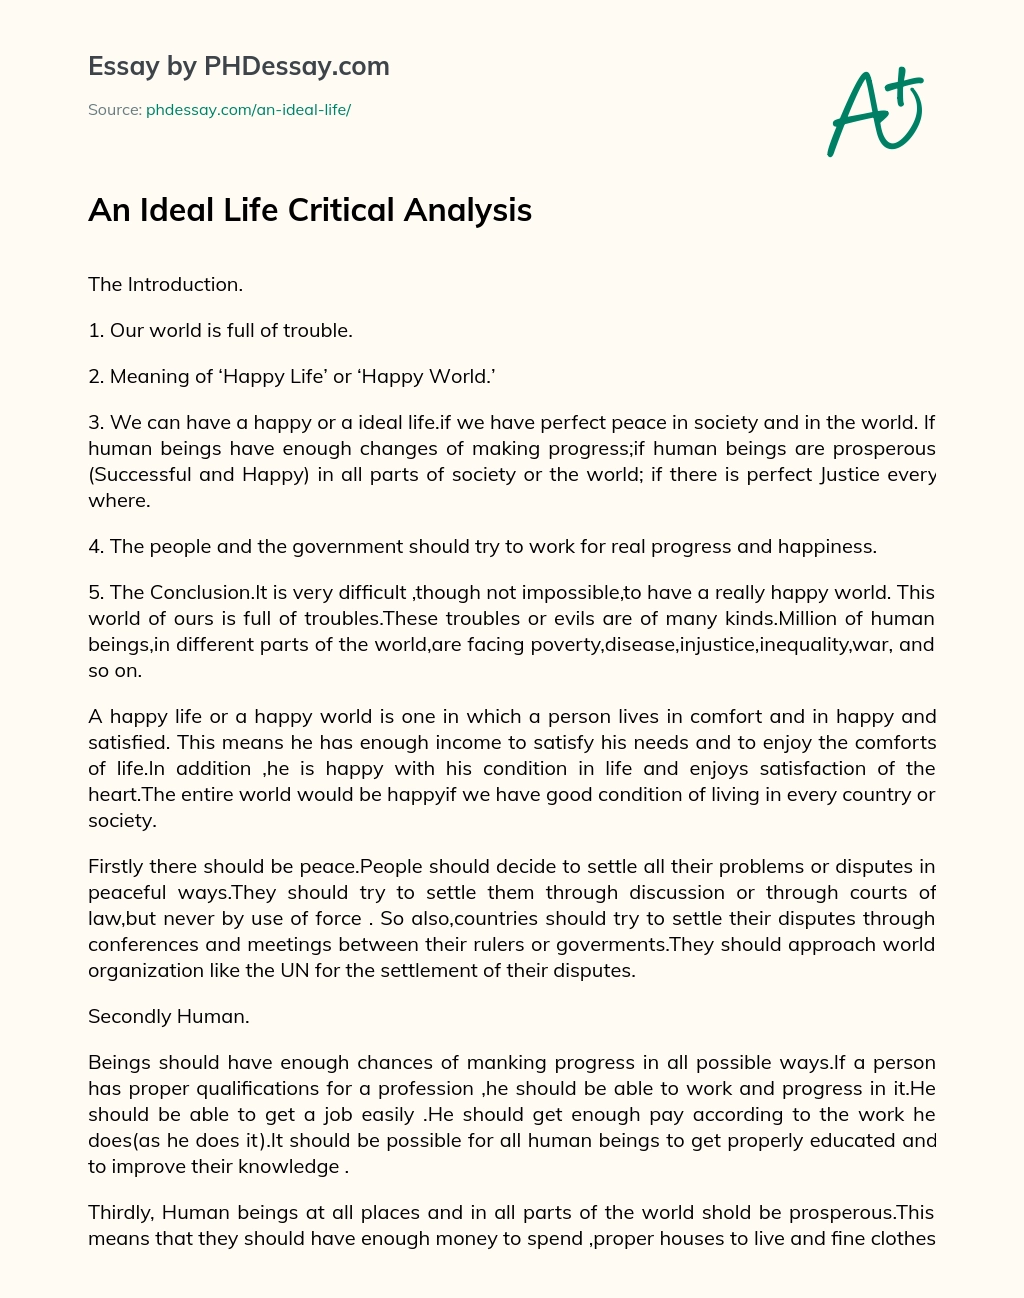 An Ideal Life Critical Analysis essay